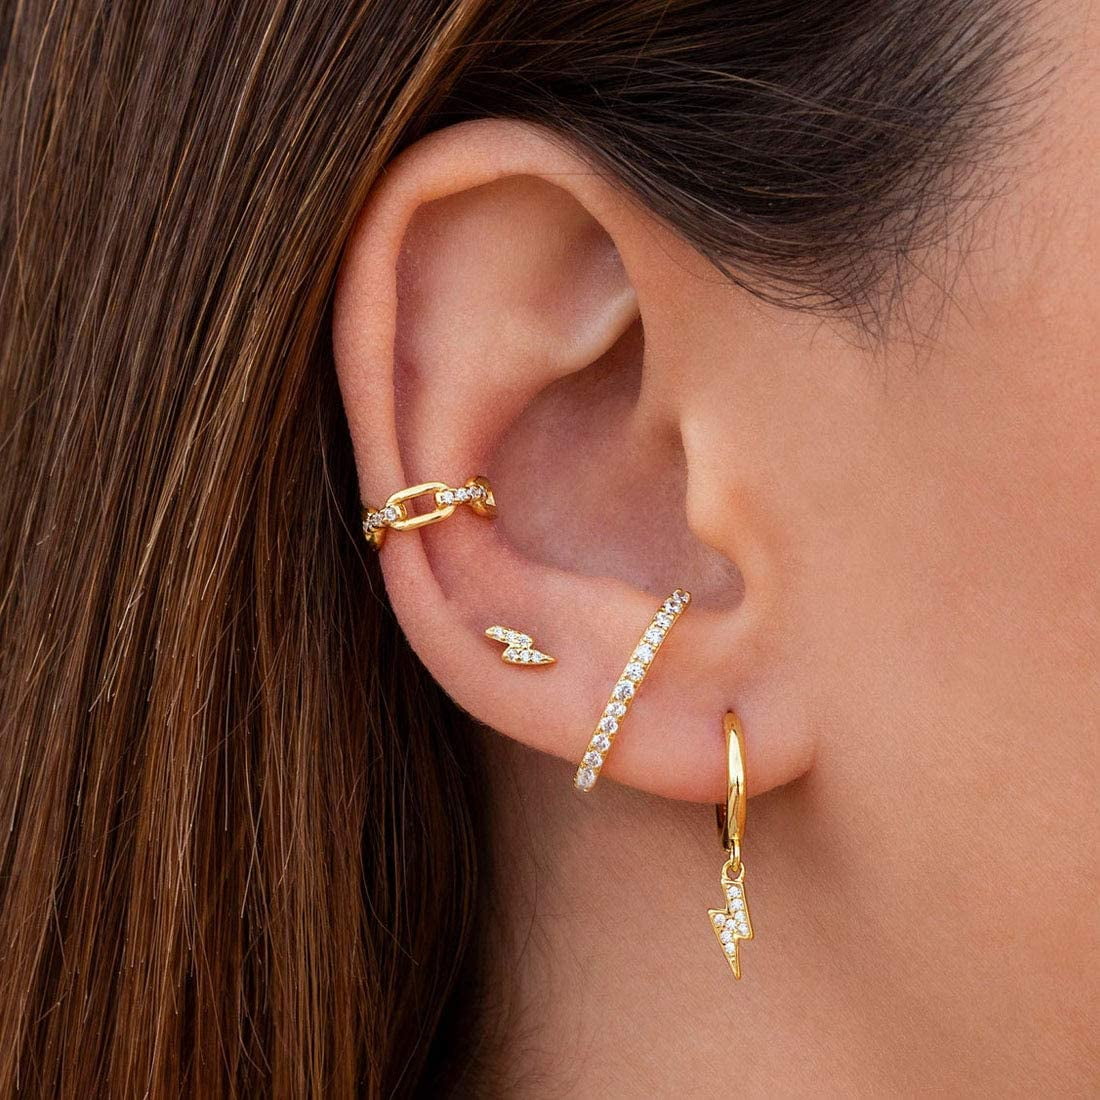 Gold Ear Cuff - No Piercing Necessary, Elk & Bloom - Everyday Fine Jewelry